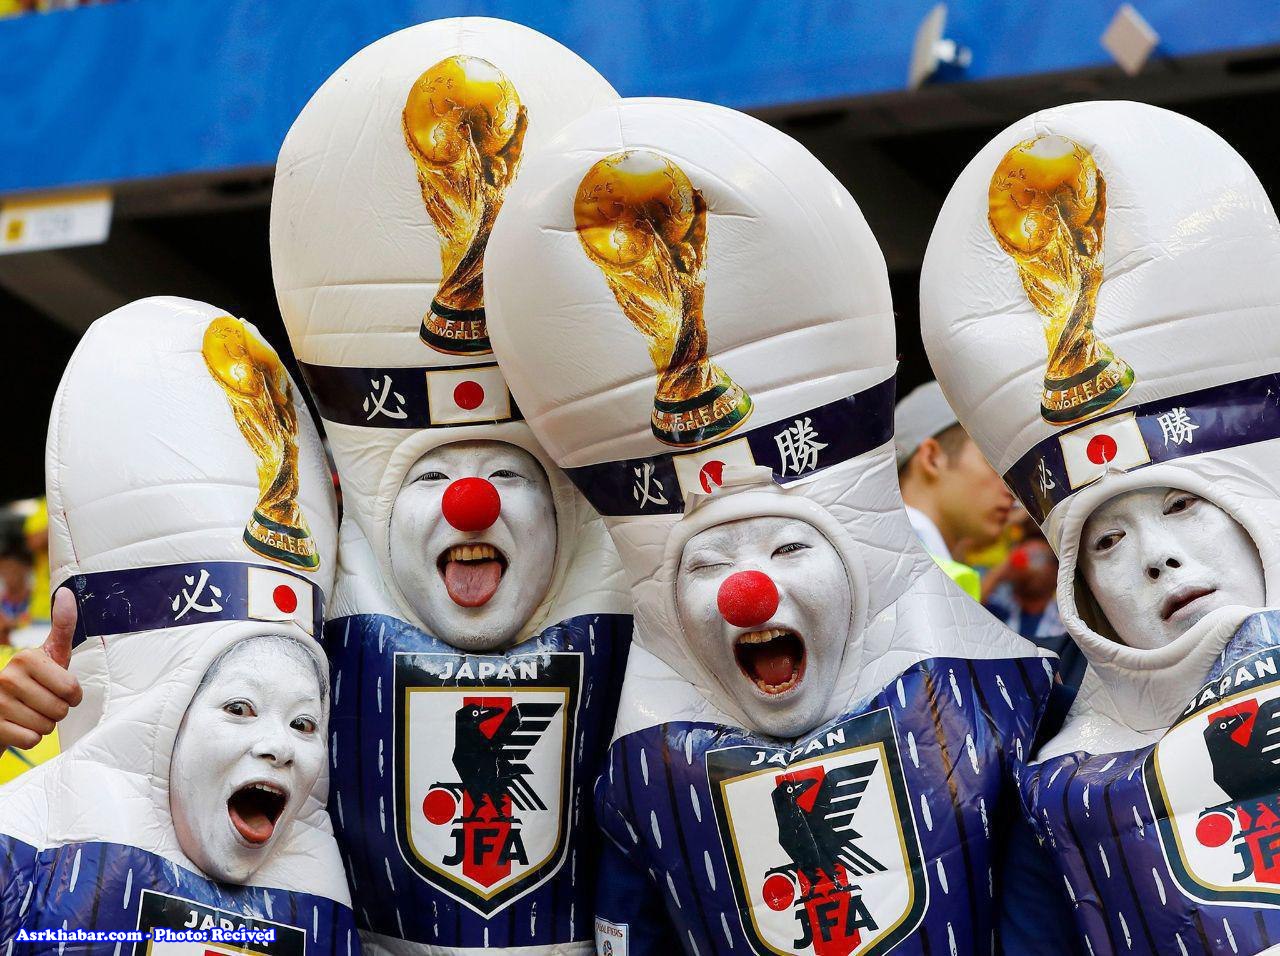 پوشش جالب هواداران تیم ملی ژاپن(عكس)